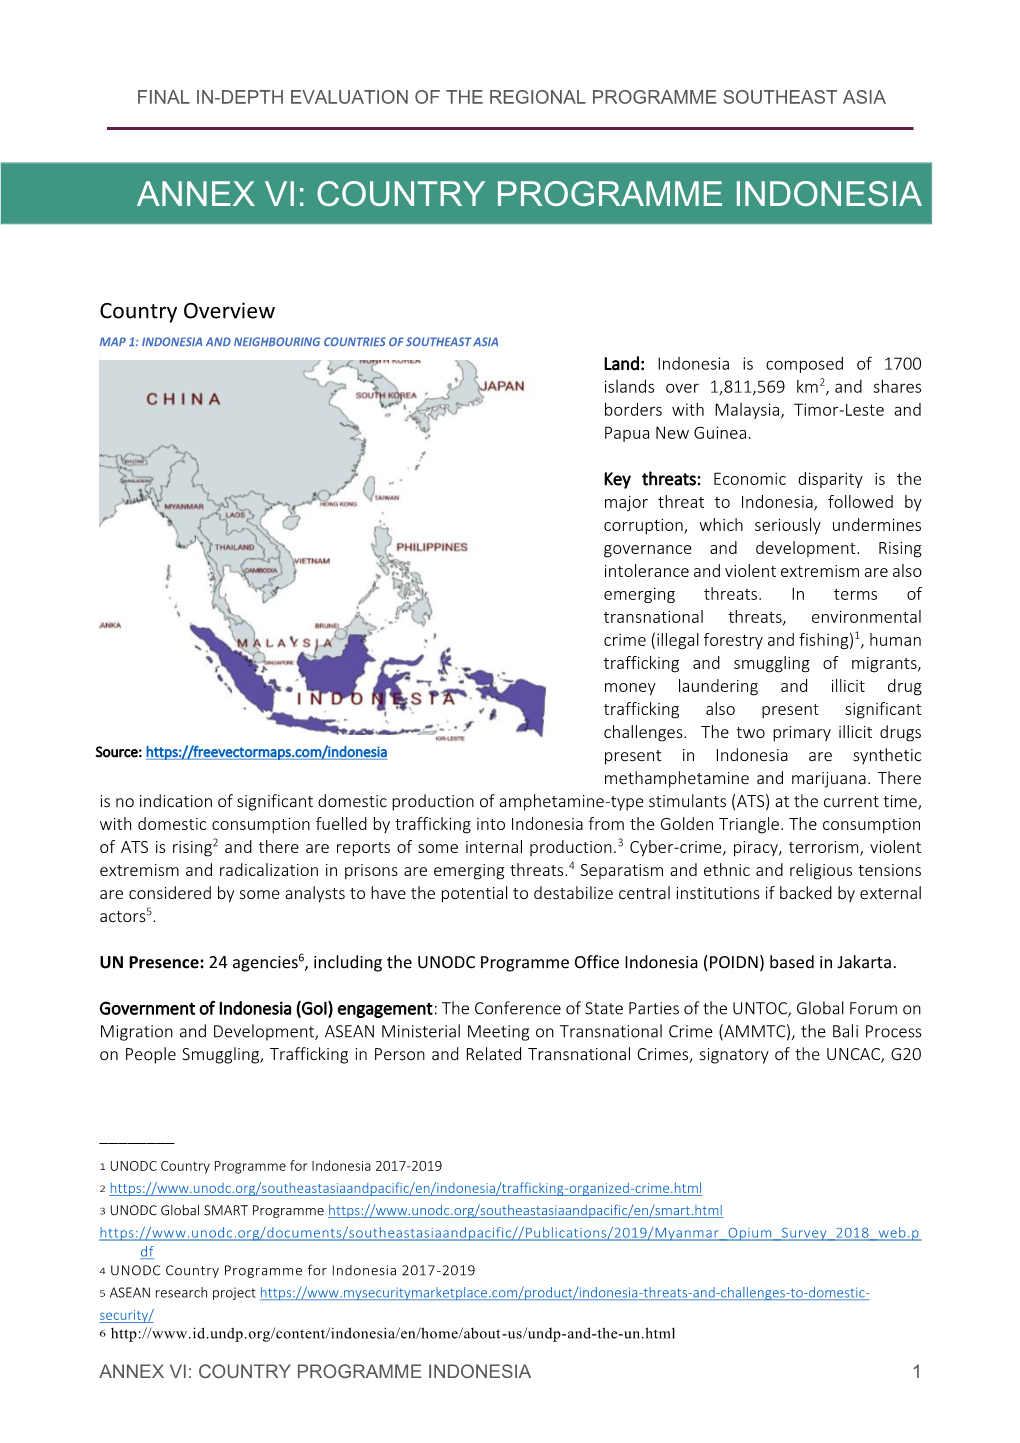 Annex Vi: Country Programme Indonesia